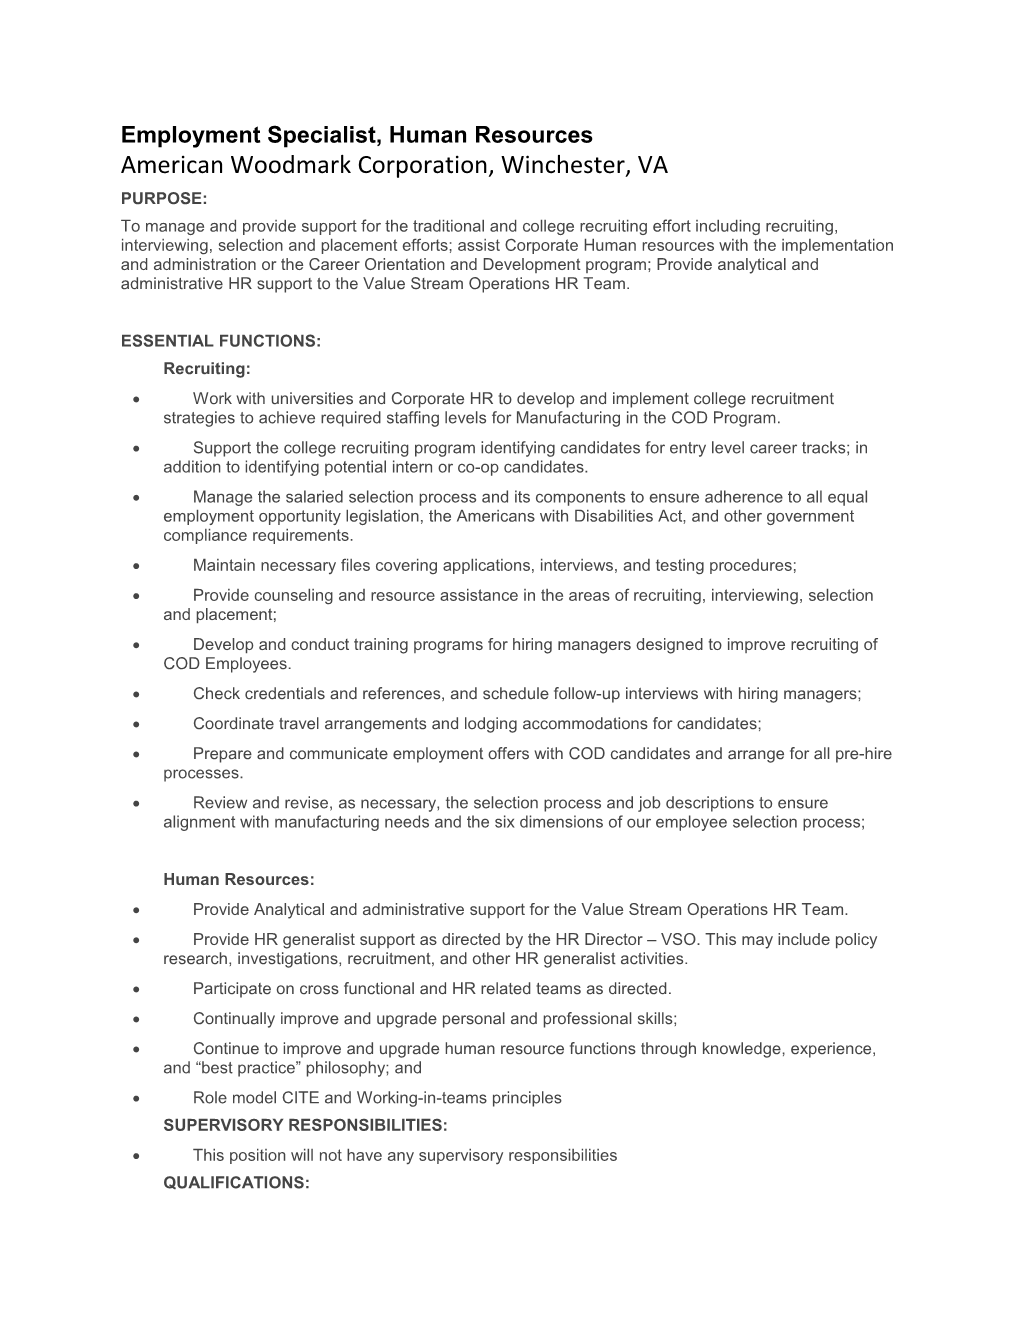 Employment Specialist, Human Resources American Woodmark Corporation, Winchester, VA